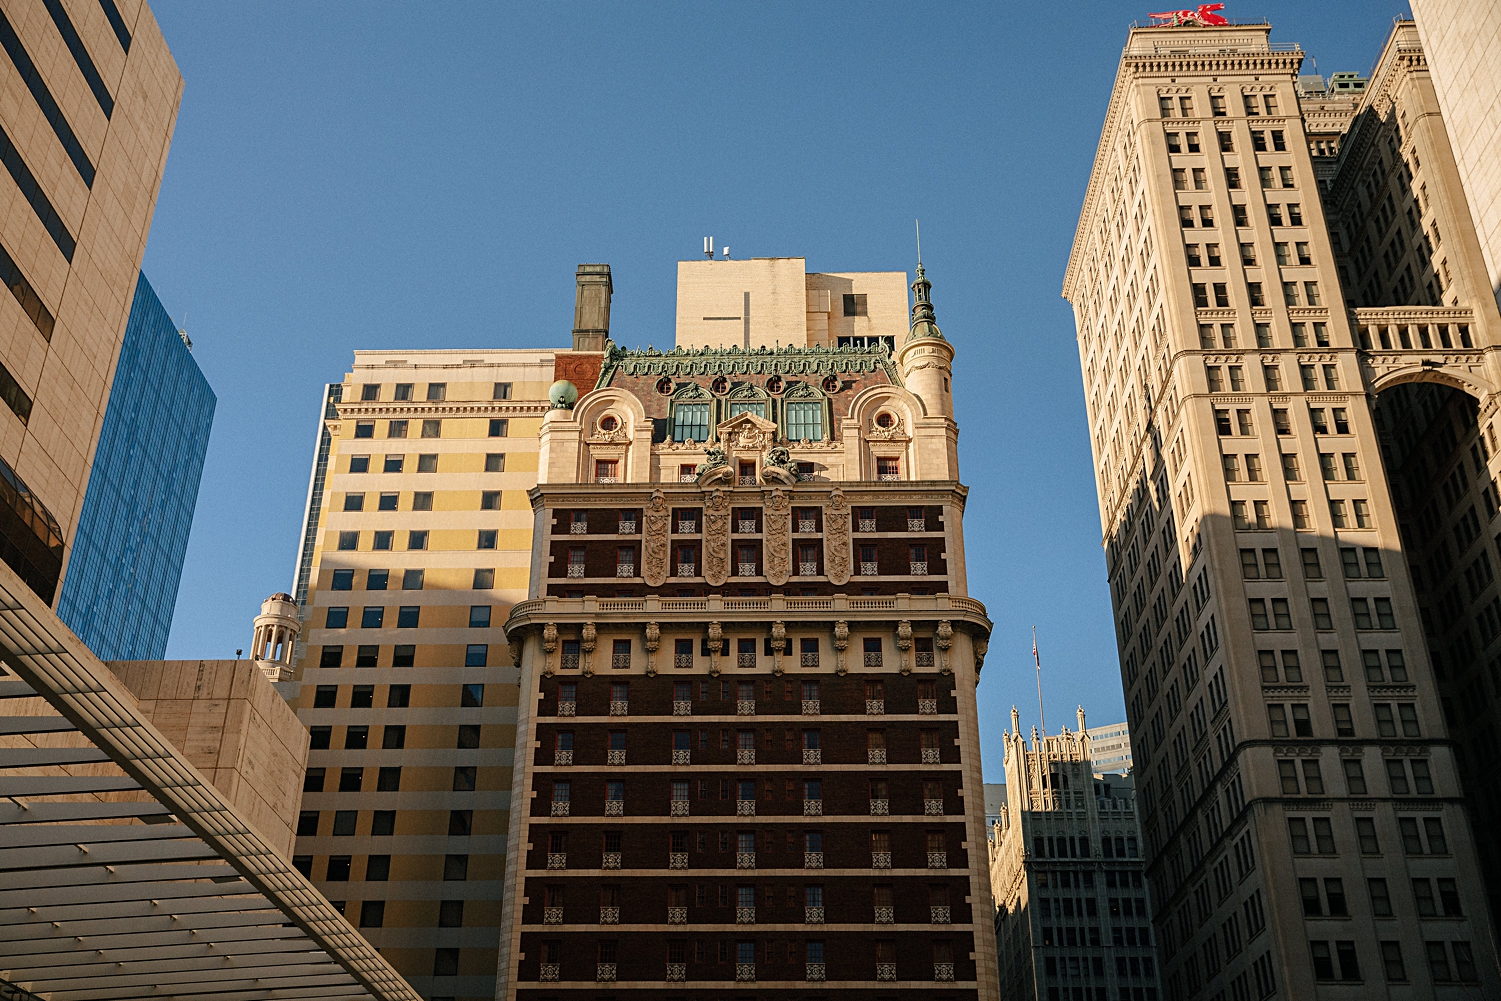 Adolphus hotel high rise exterior against blue sky